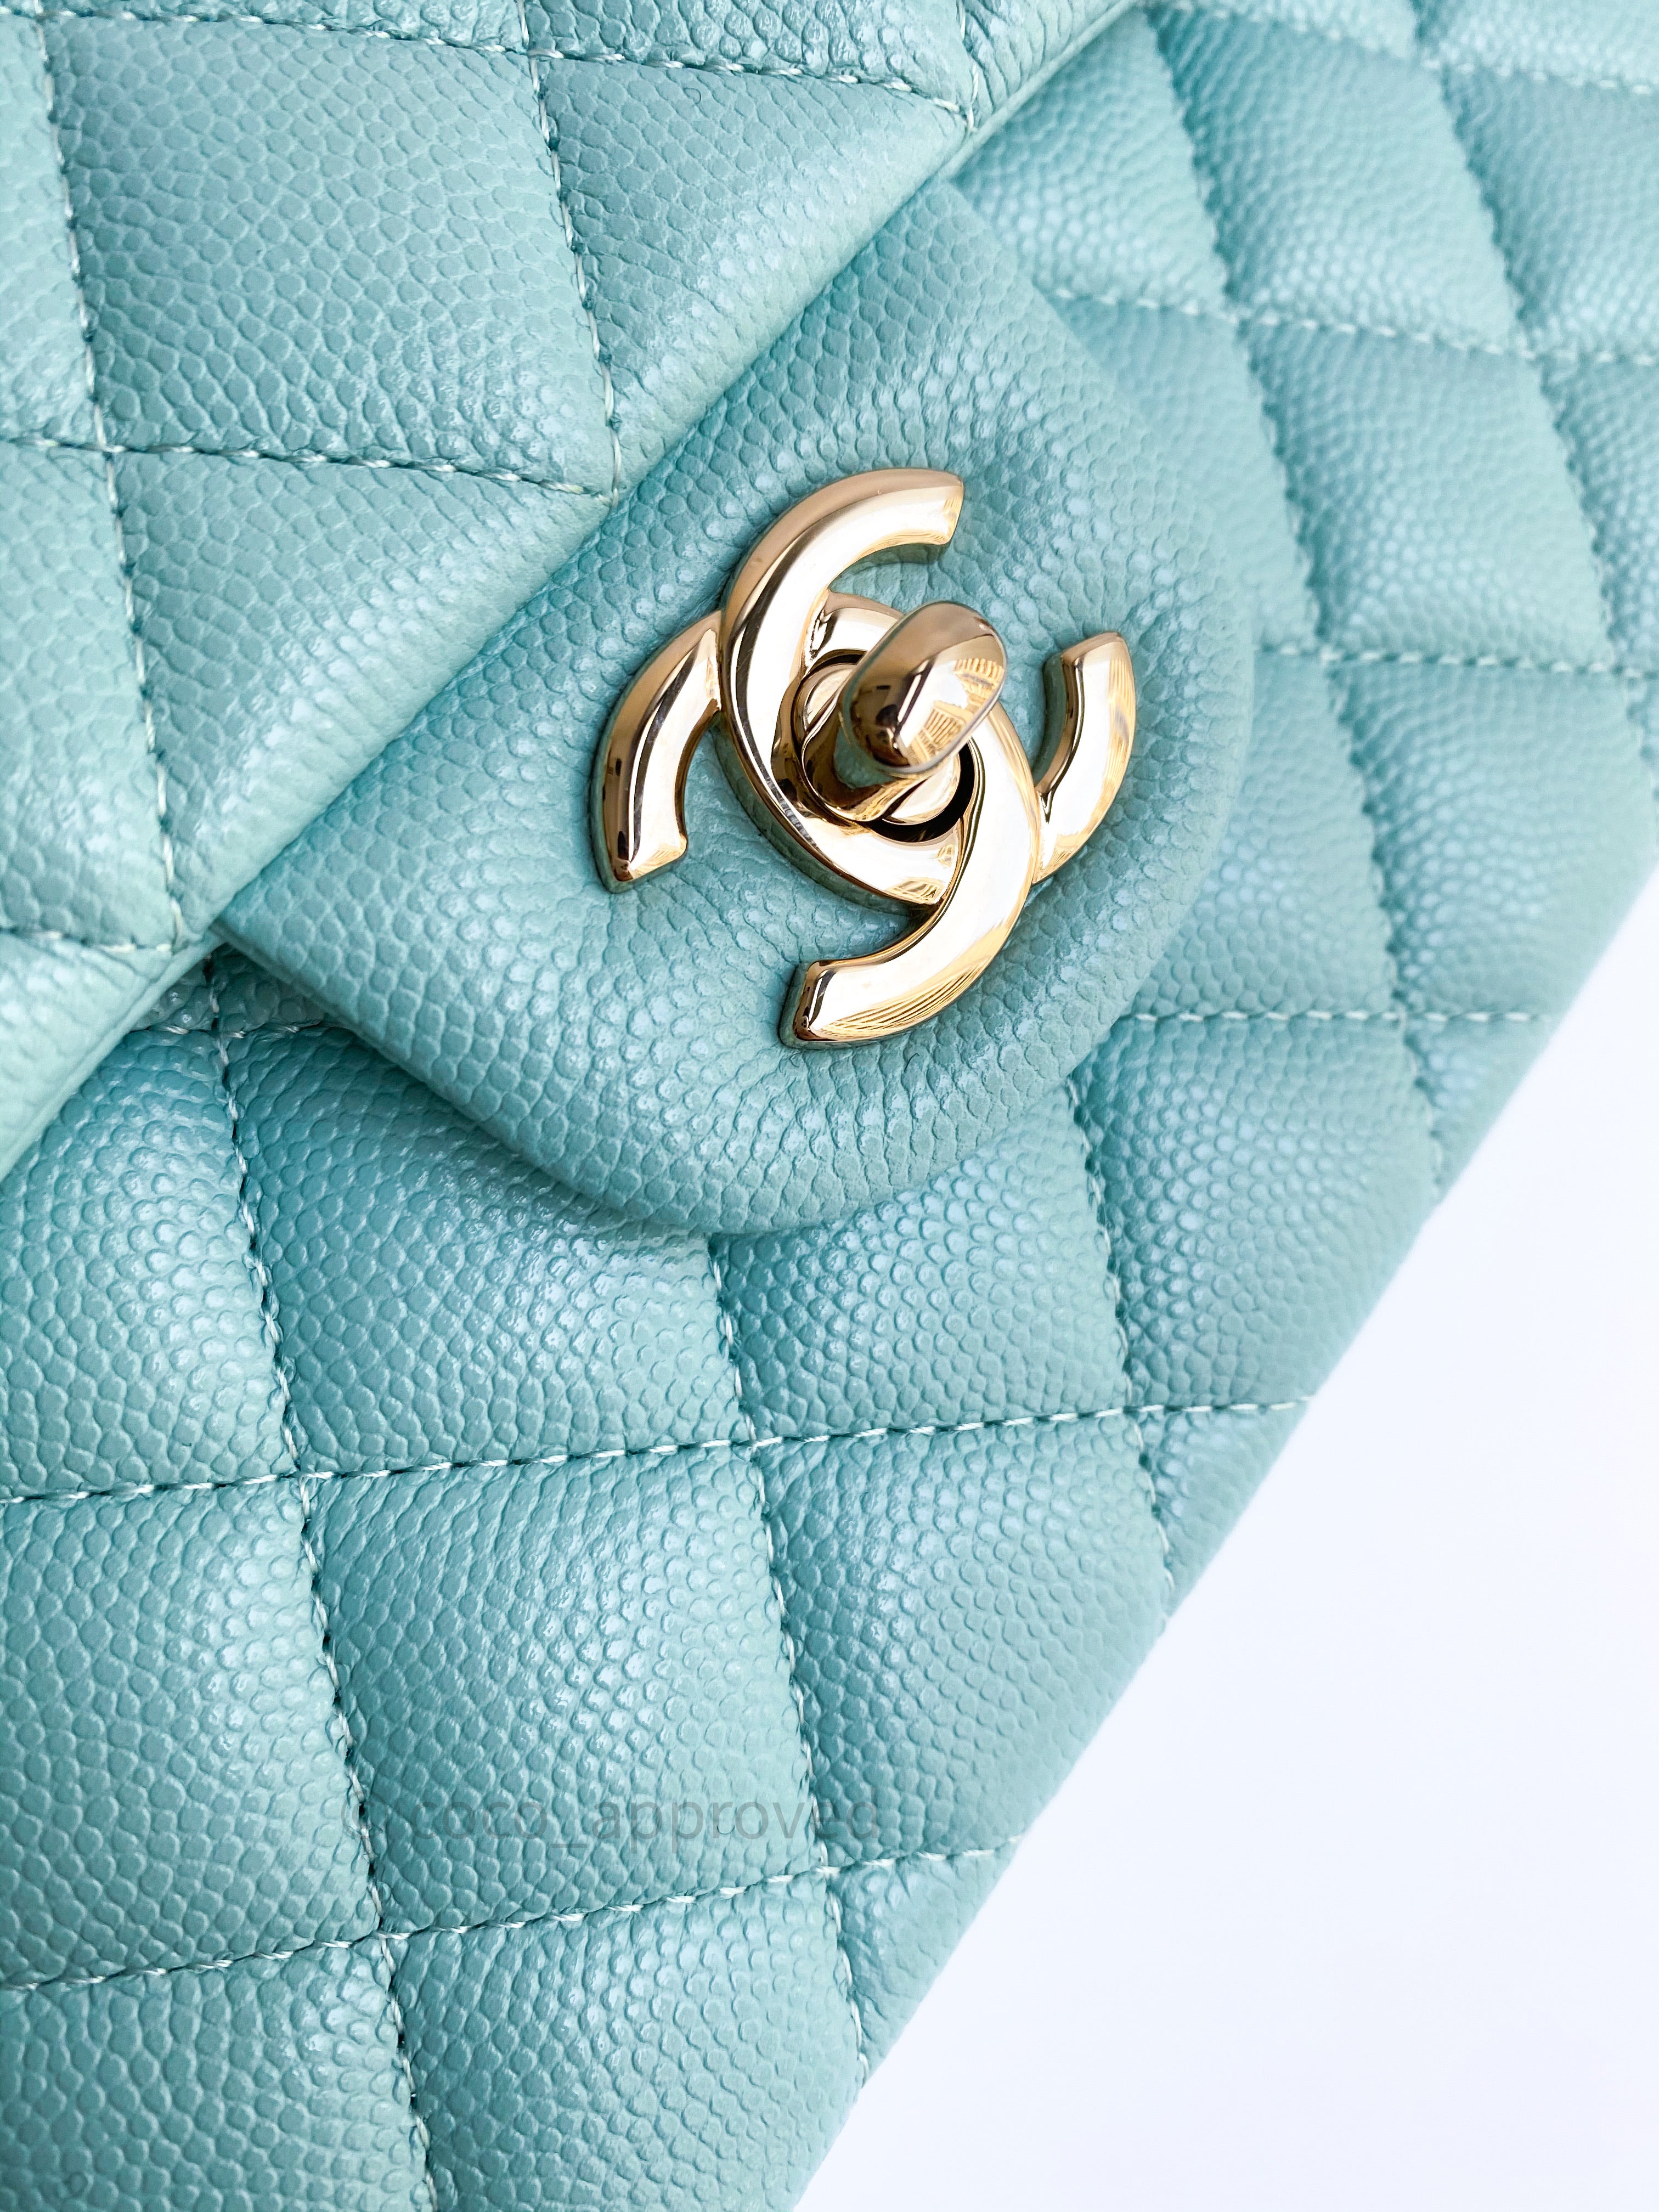 Chanel S/M Small Classic Flap Tiffany Blue Caviar Gold Hardware